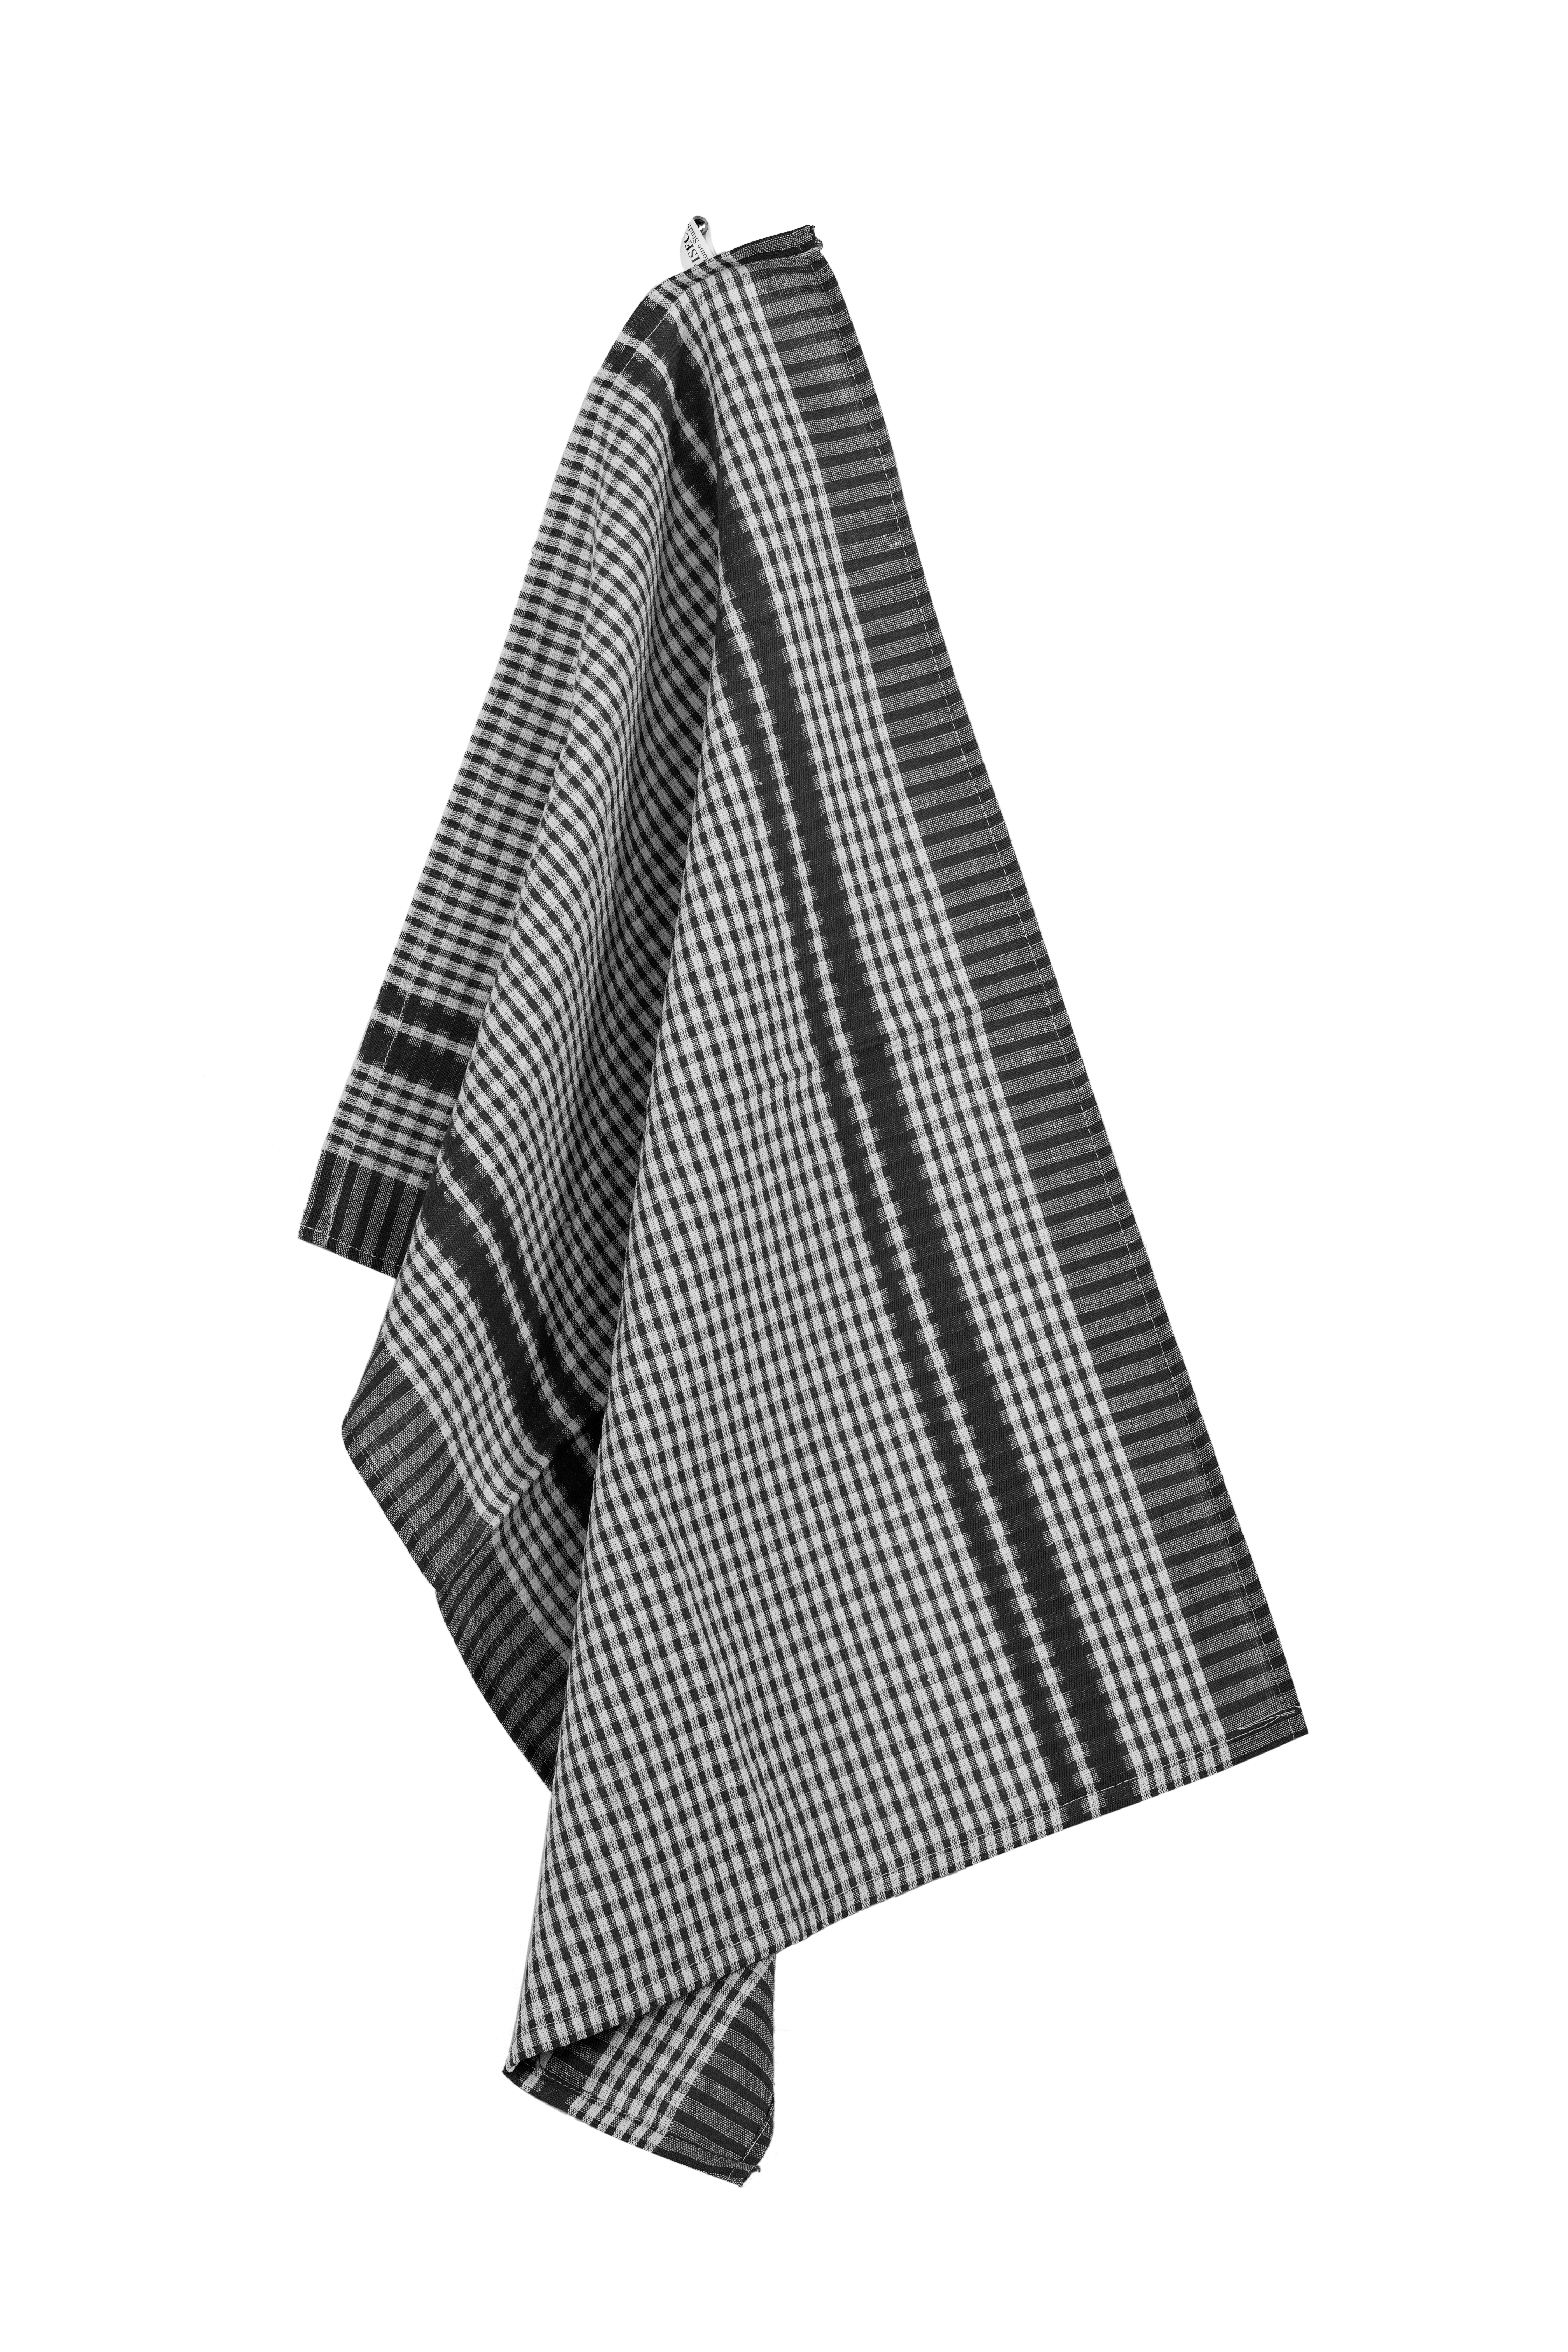 Torchon WAFFLE 50x70cm - set/4 - black